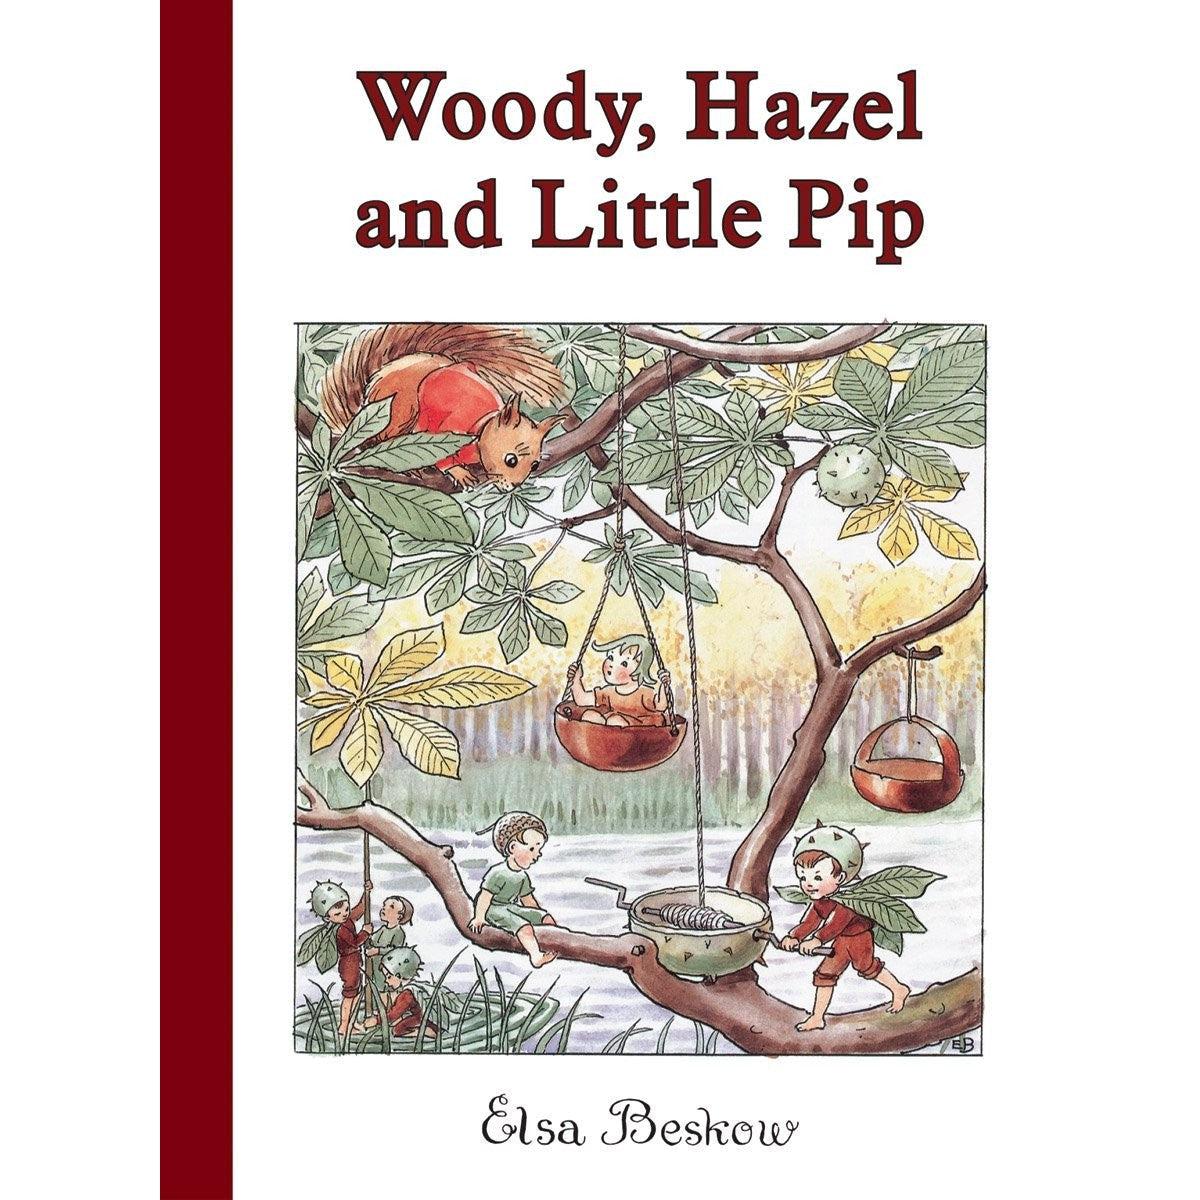 Woody, Hazel and Little Pip